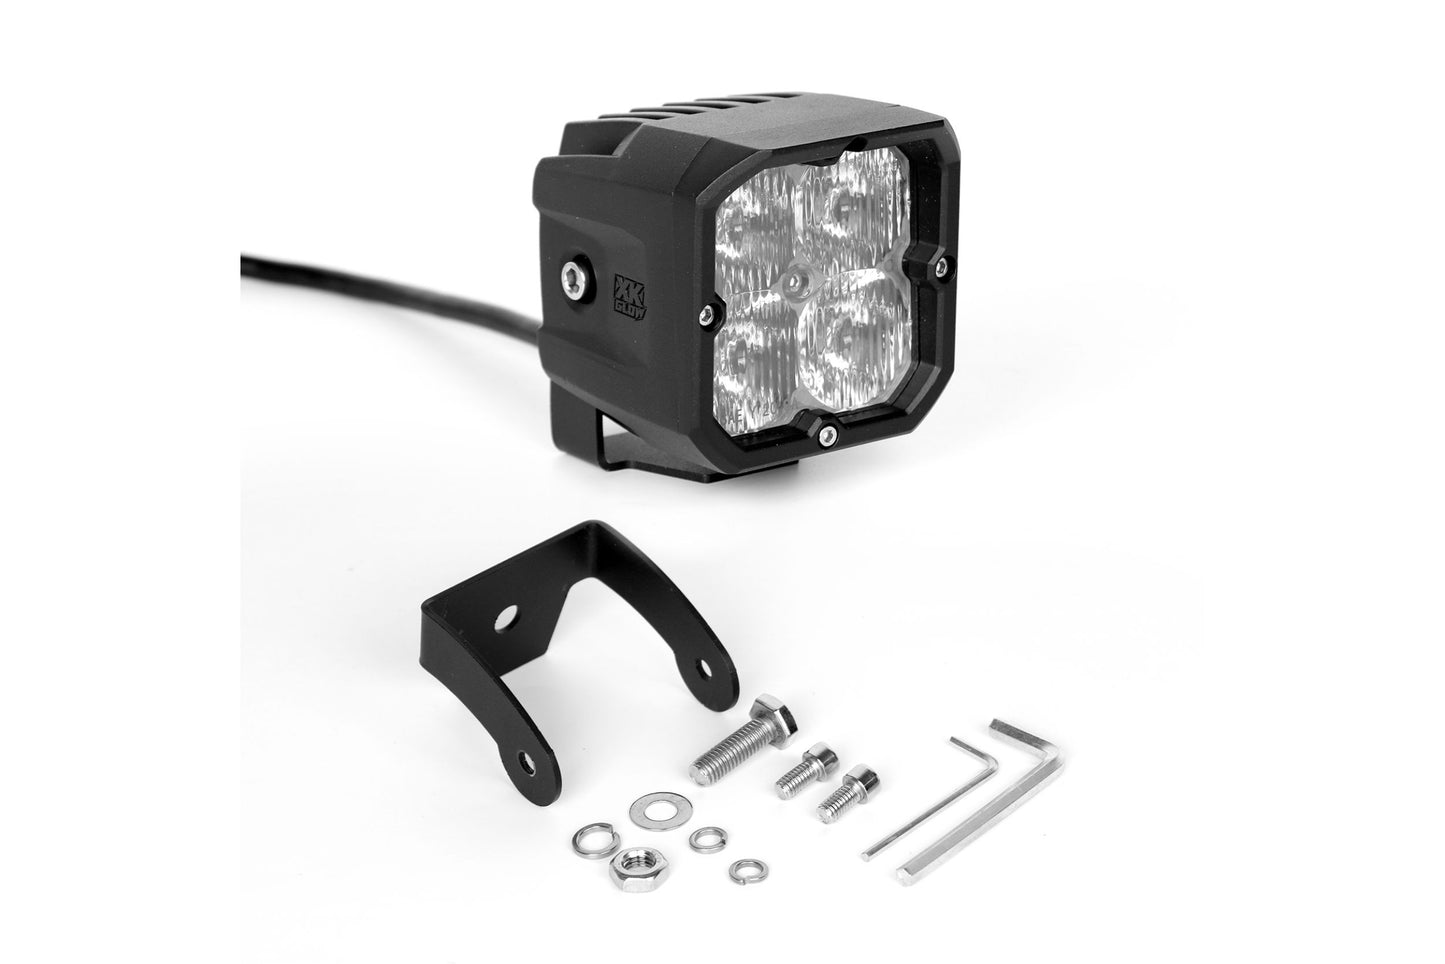 XKChrome RGB LED Cube Light: Driving / Surface